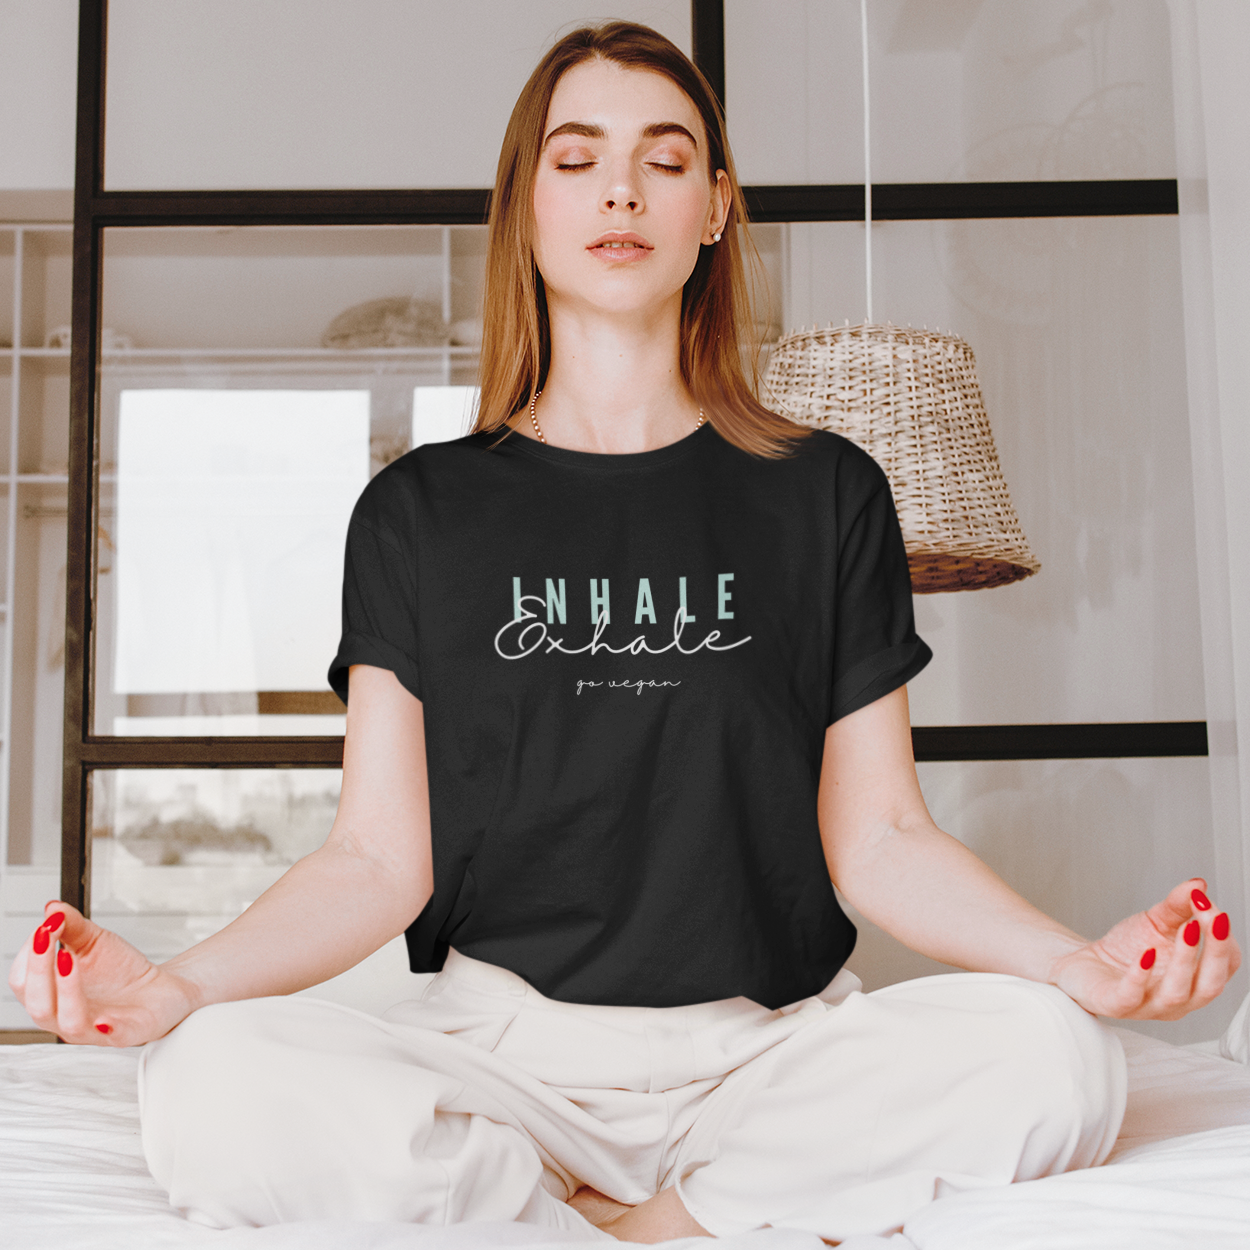 inhale exhale go vegan - Damen T-Shirt